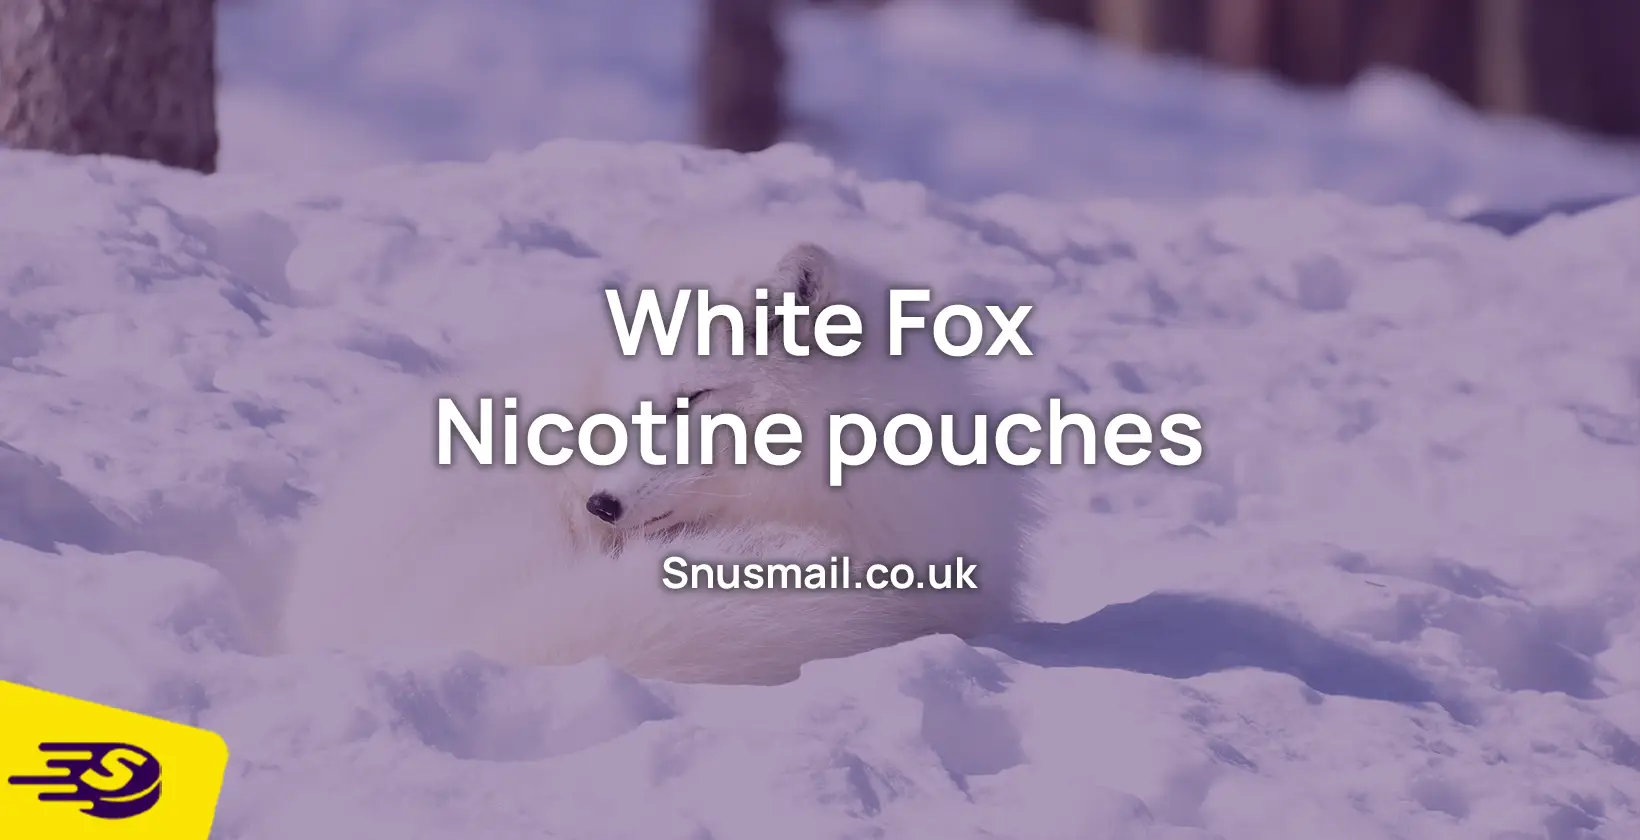 White fox nicotine pouches article